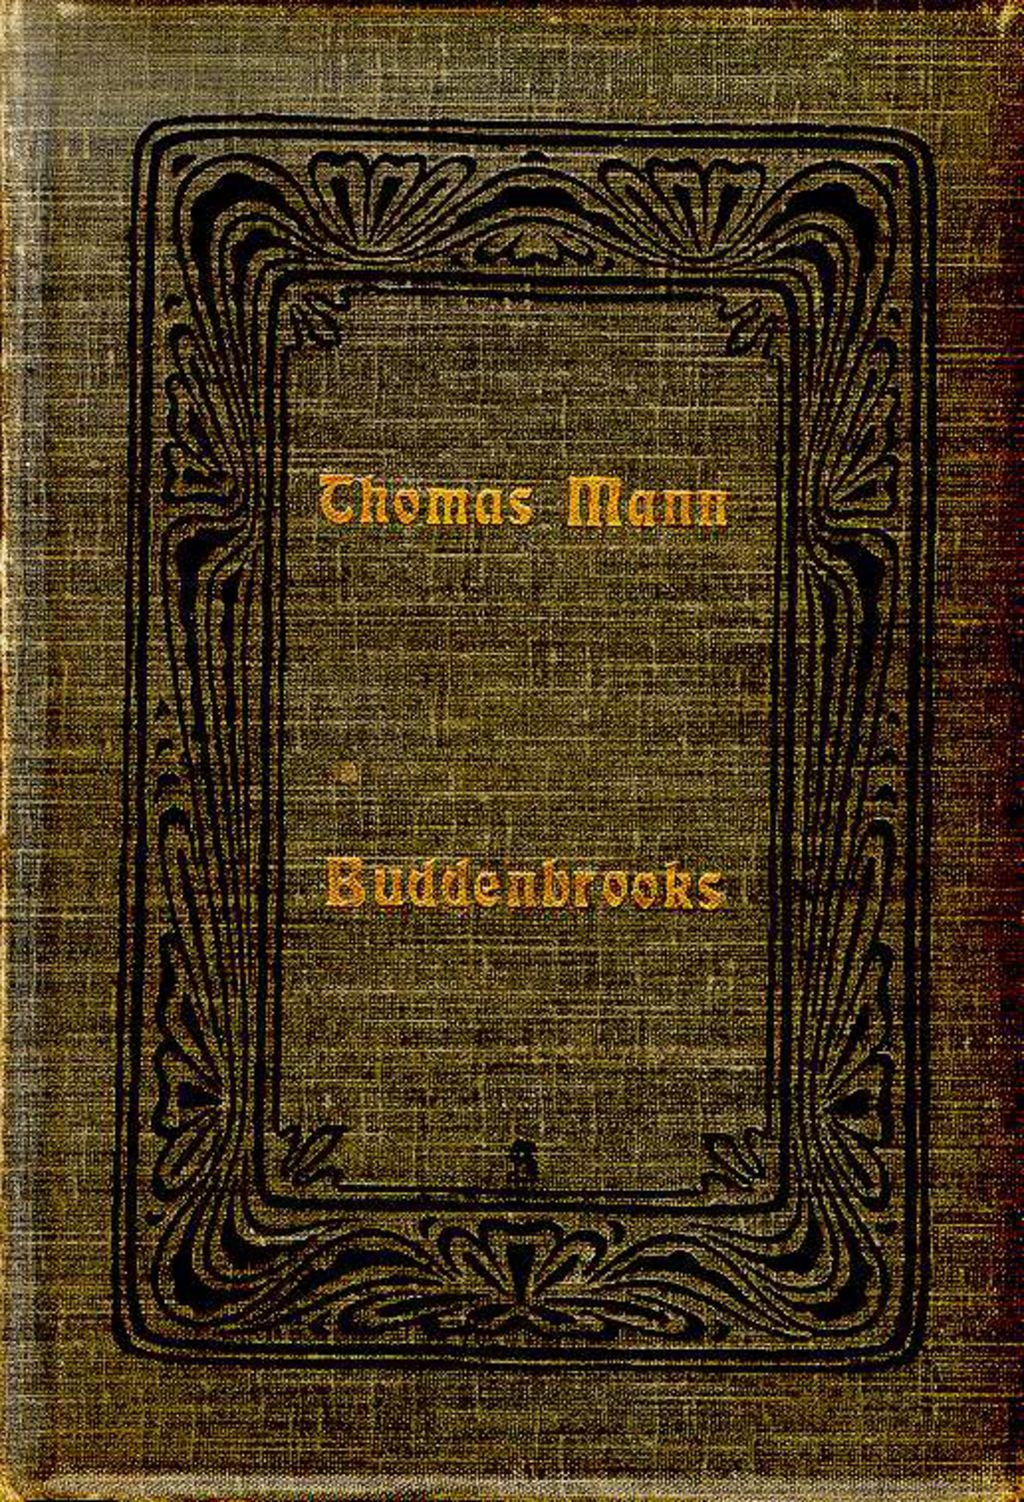 Buch: Mann, Thomas "Buddenbrooks. Verfall einer Familie", 1901